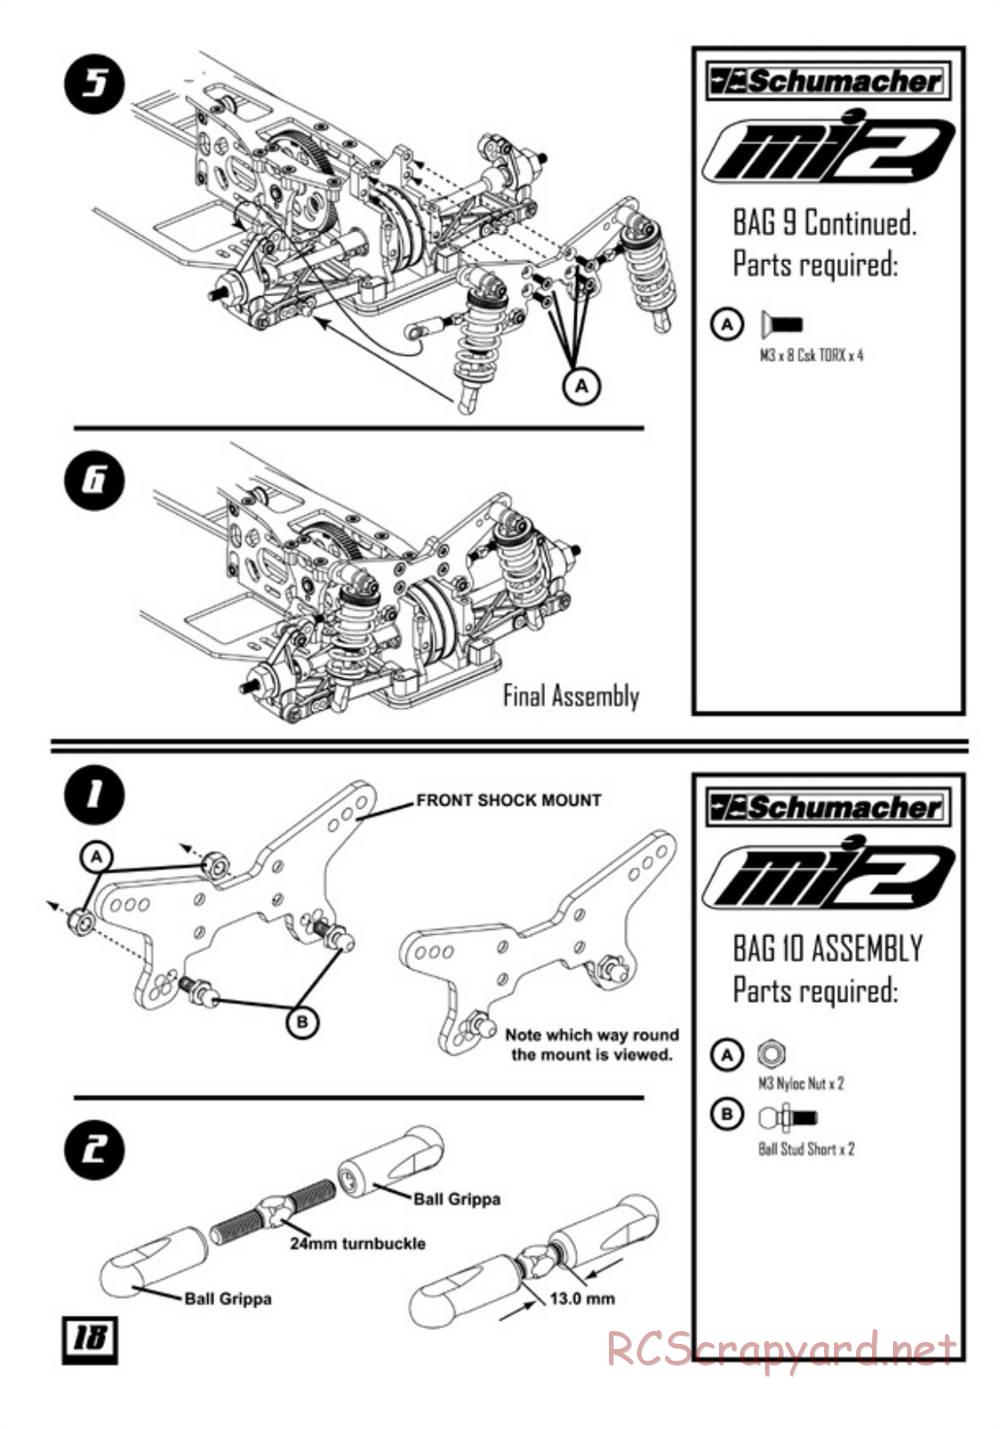 Schumacher - Mi2 - Manual - Page 20